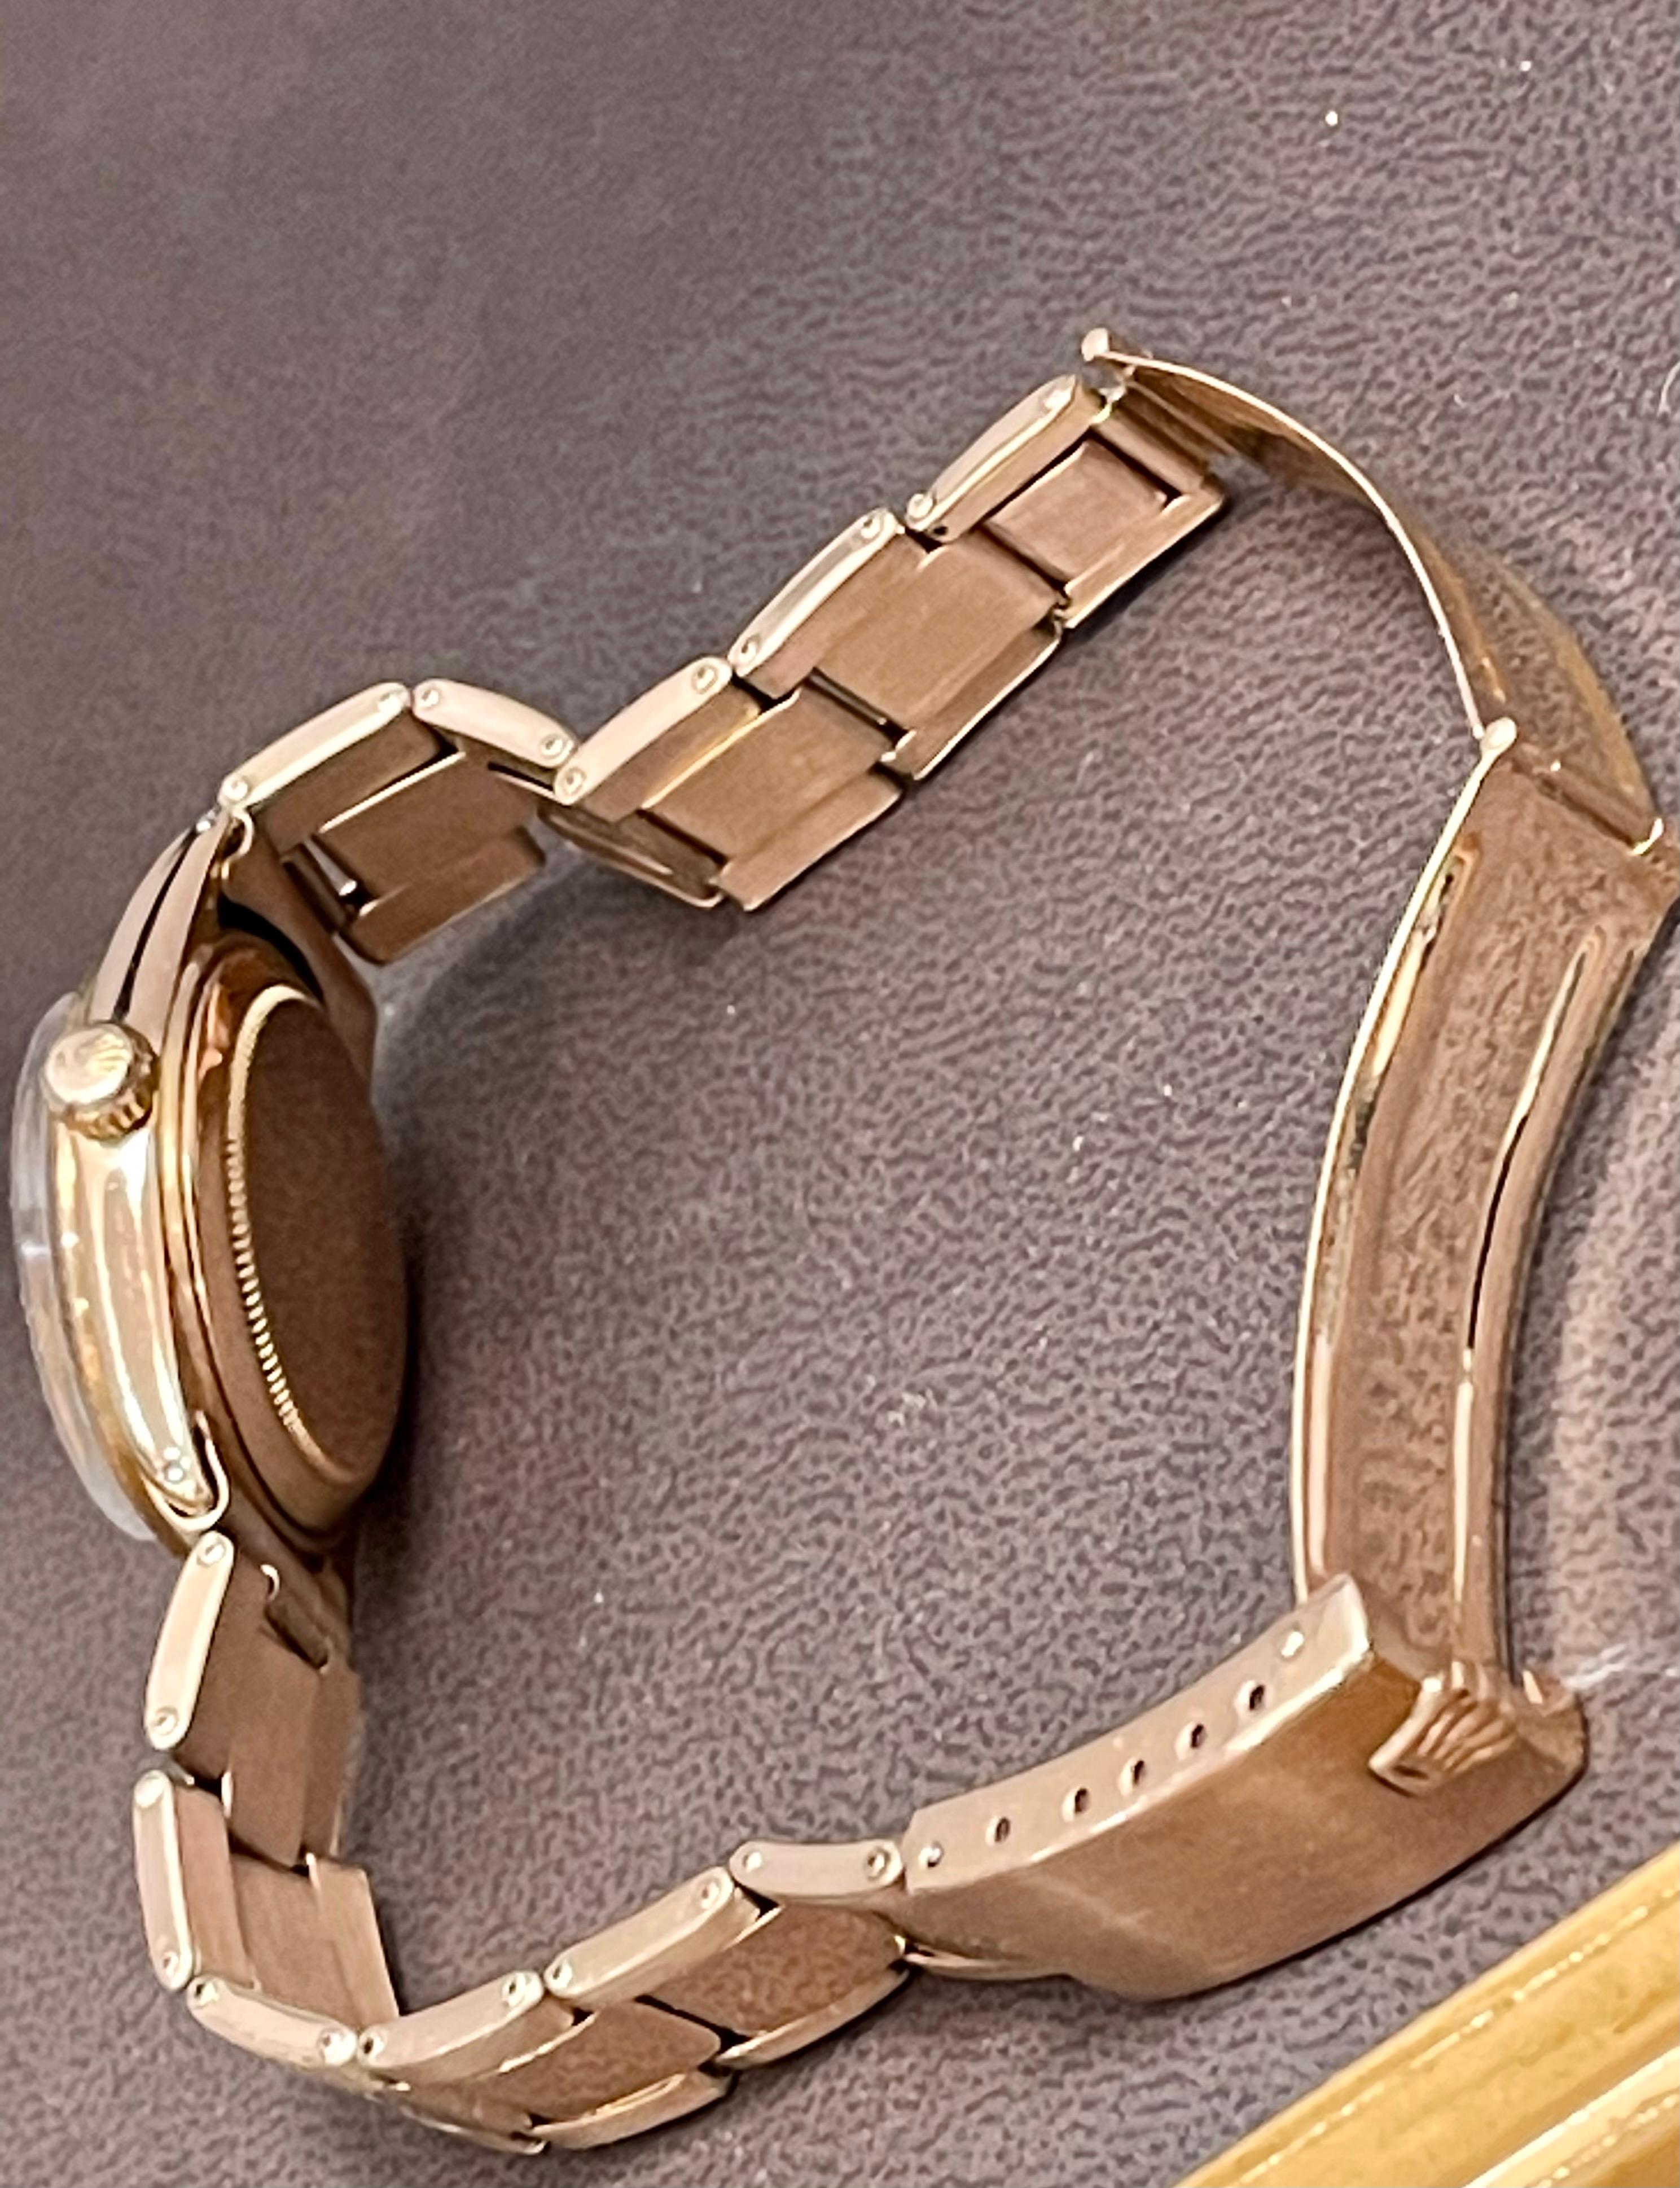 Rolex Oyster Perpatual Lady Datejust 28 Roségold geriffelte Lünette Uhr im Angebot 3